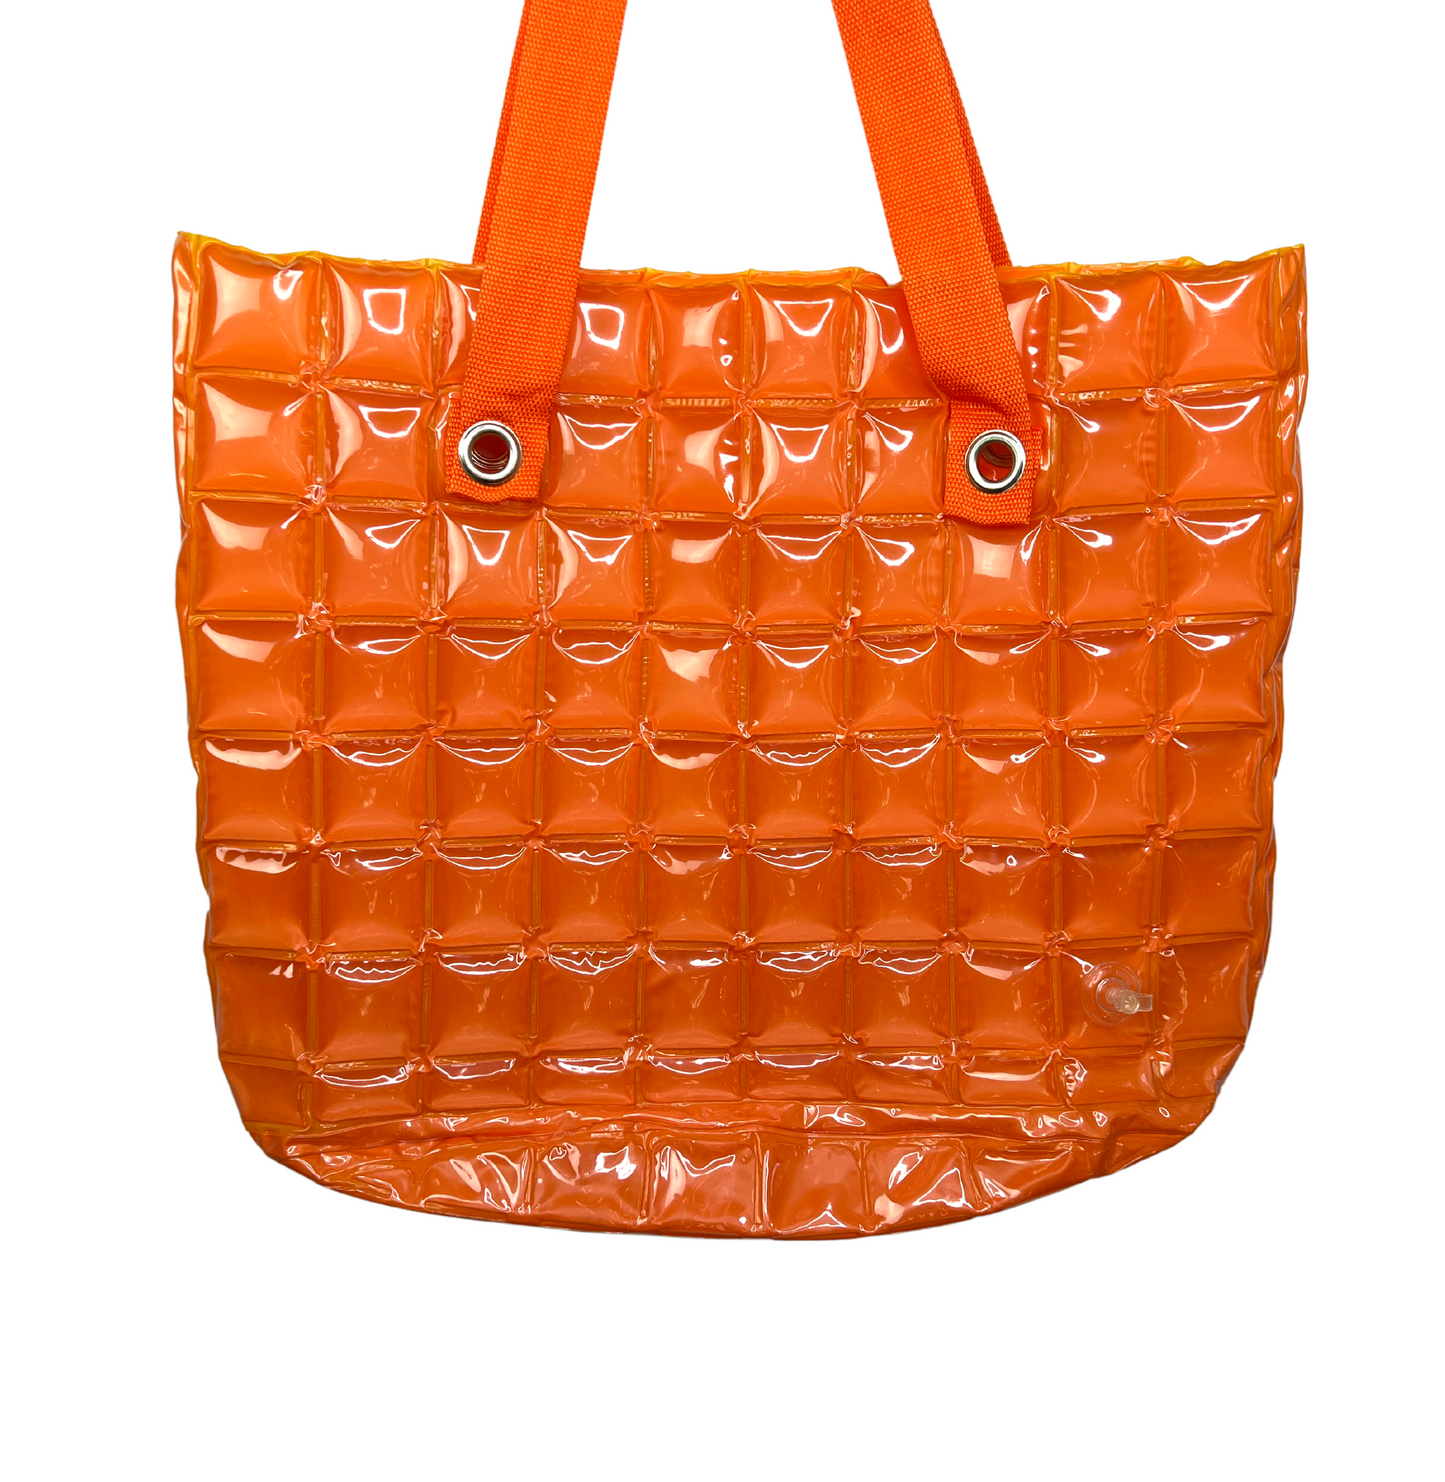 00’s Y2K Orange Inflatable Bubble Tote Bag